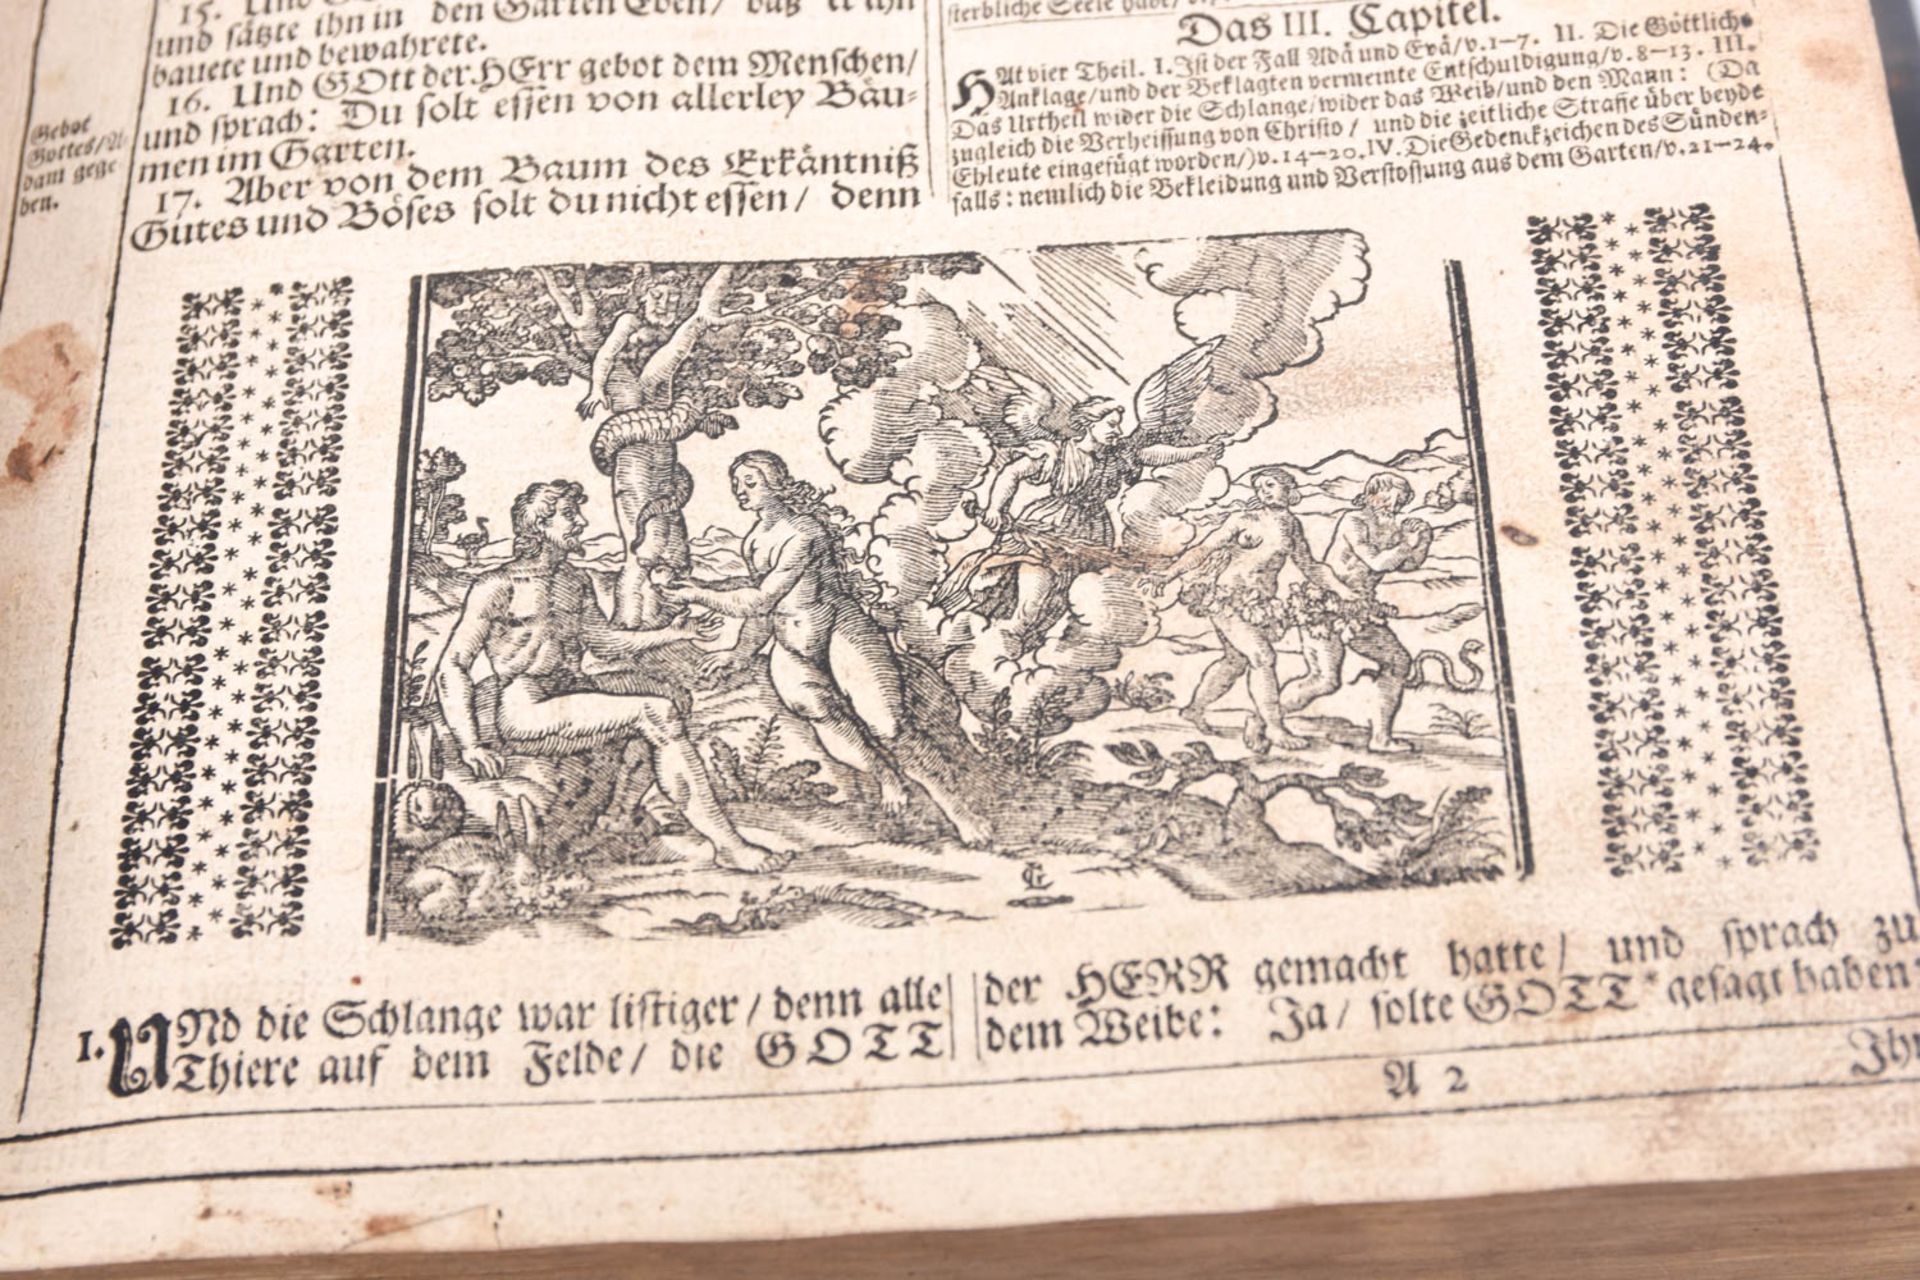 Luther Bibel, 1728 - Image 25 of 30